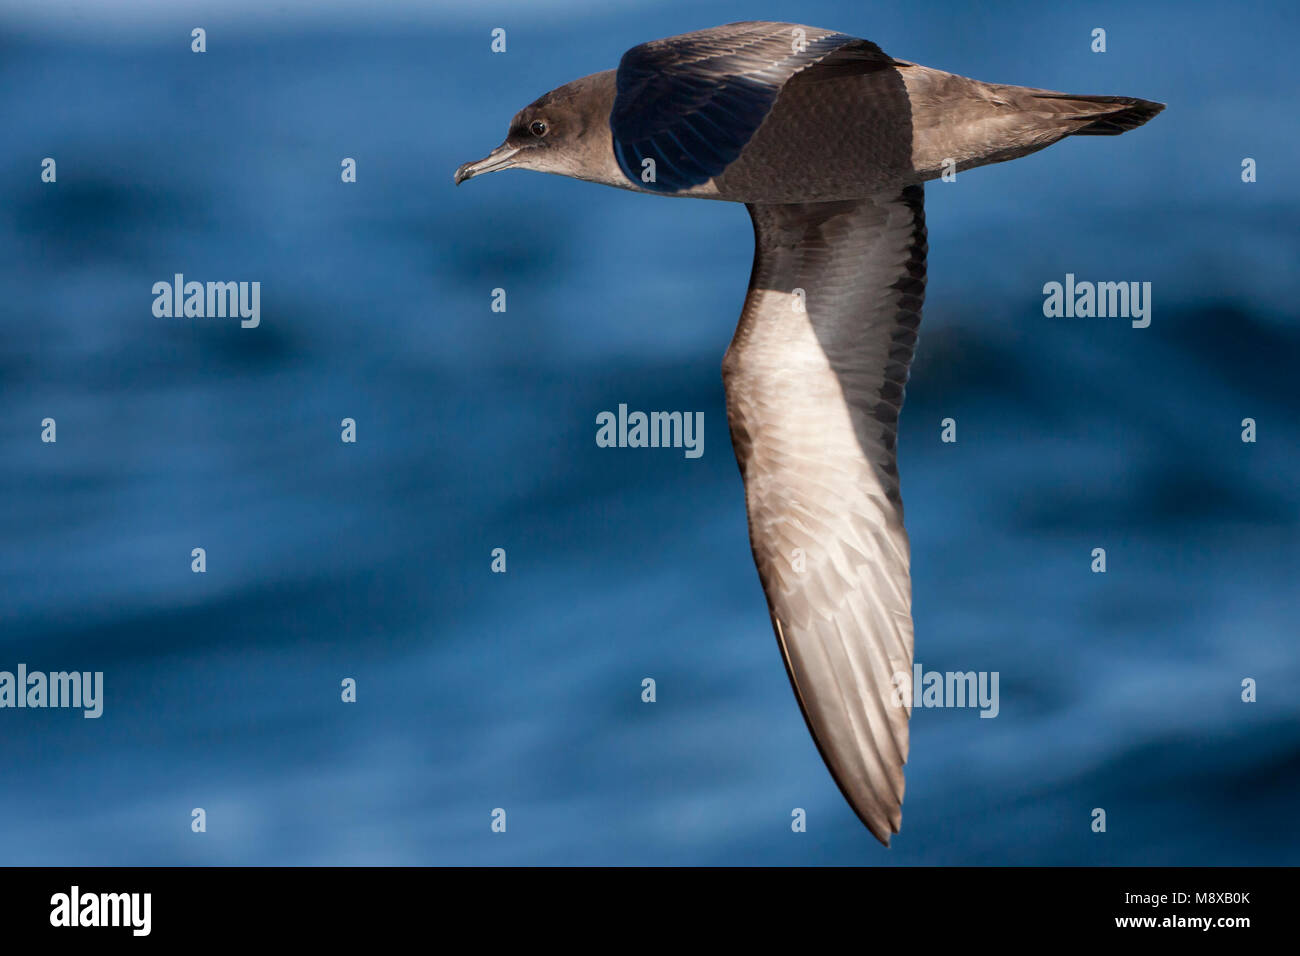 Dunbekpijlstormvogel in de vlucht; Short-tailed Shearwater in flight Stock Photo